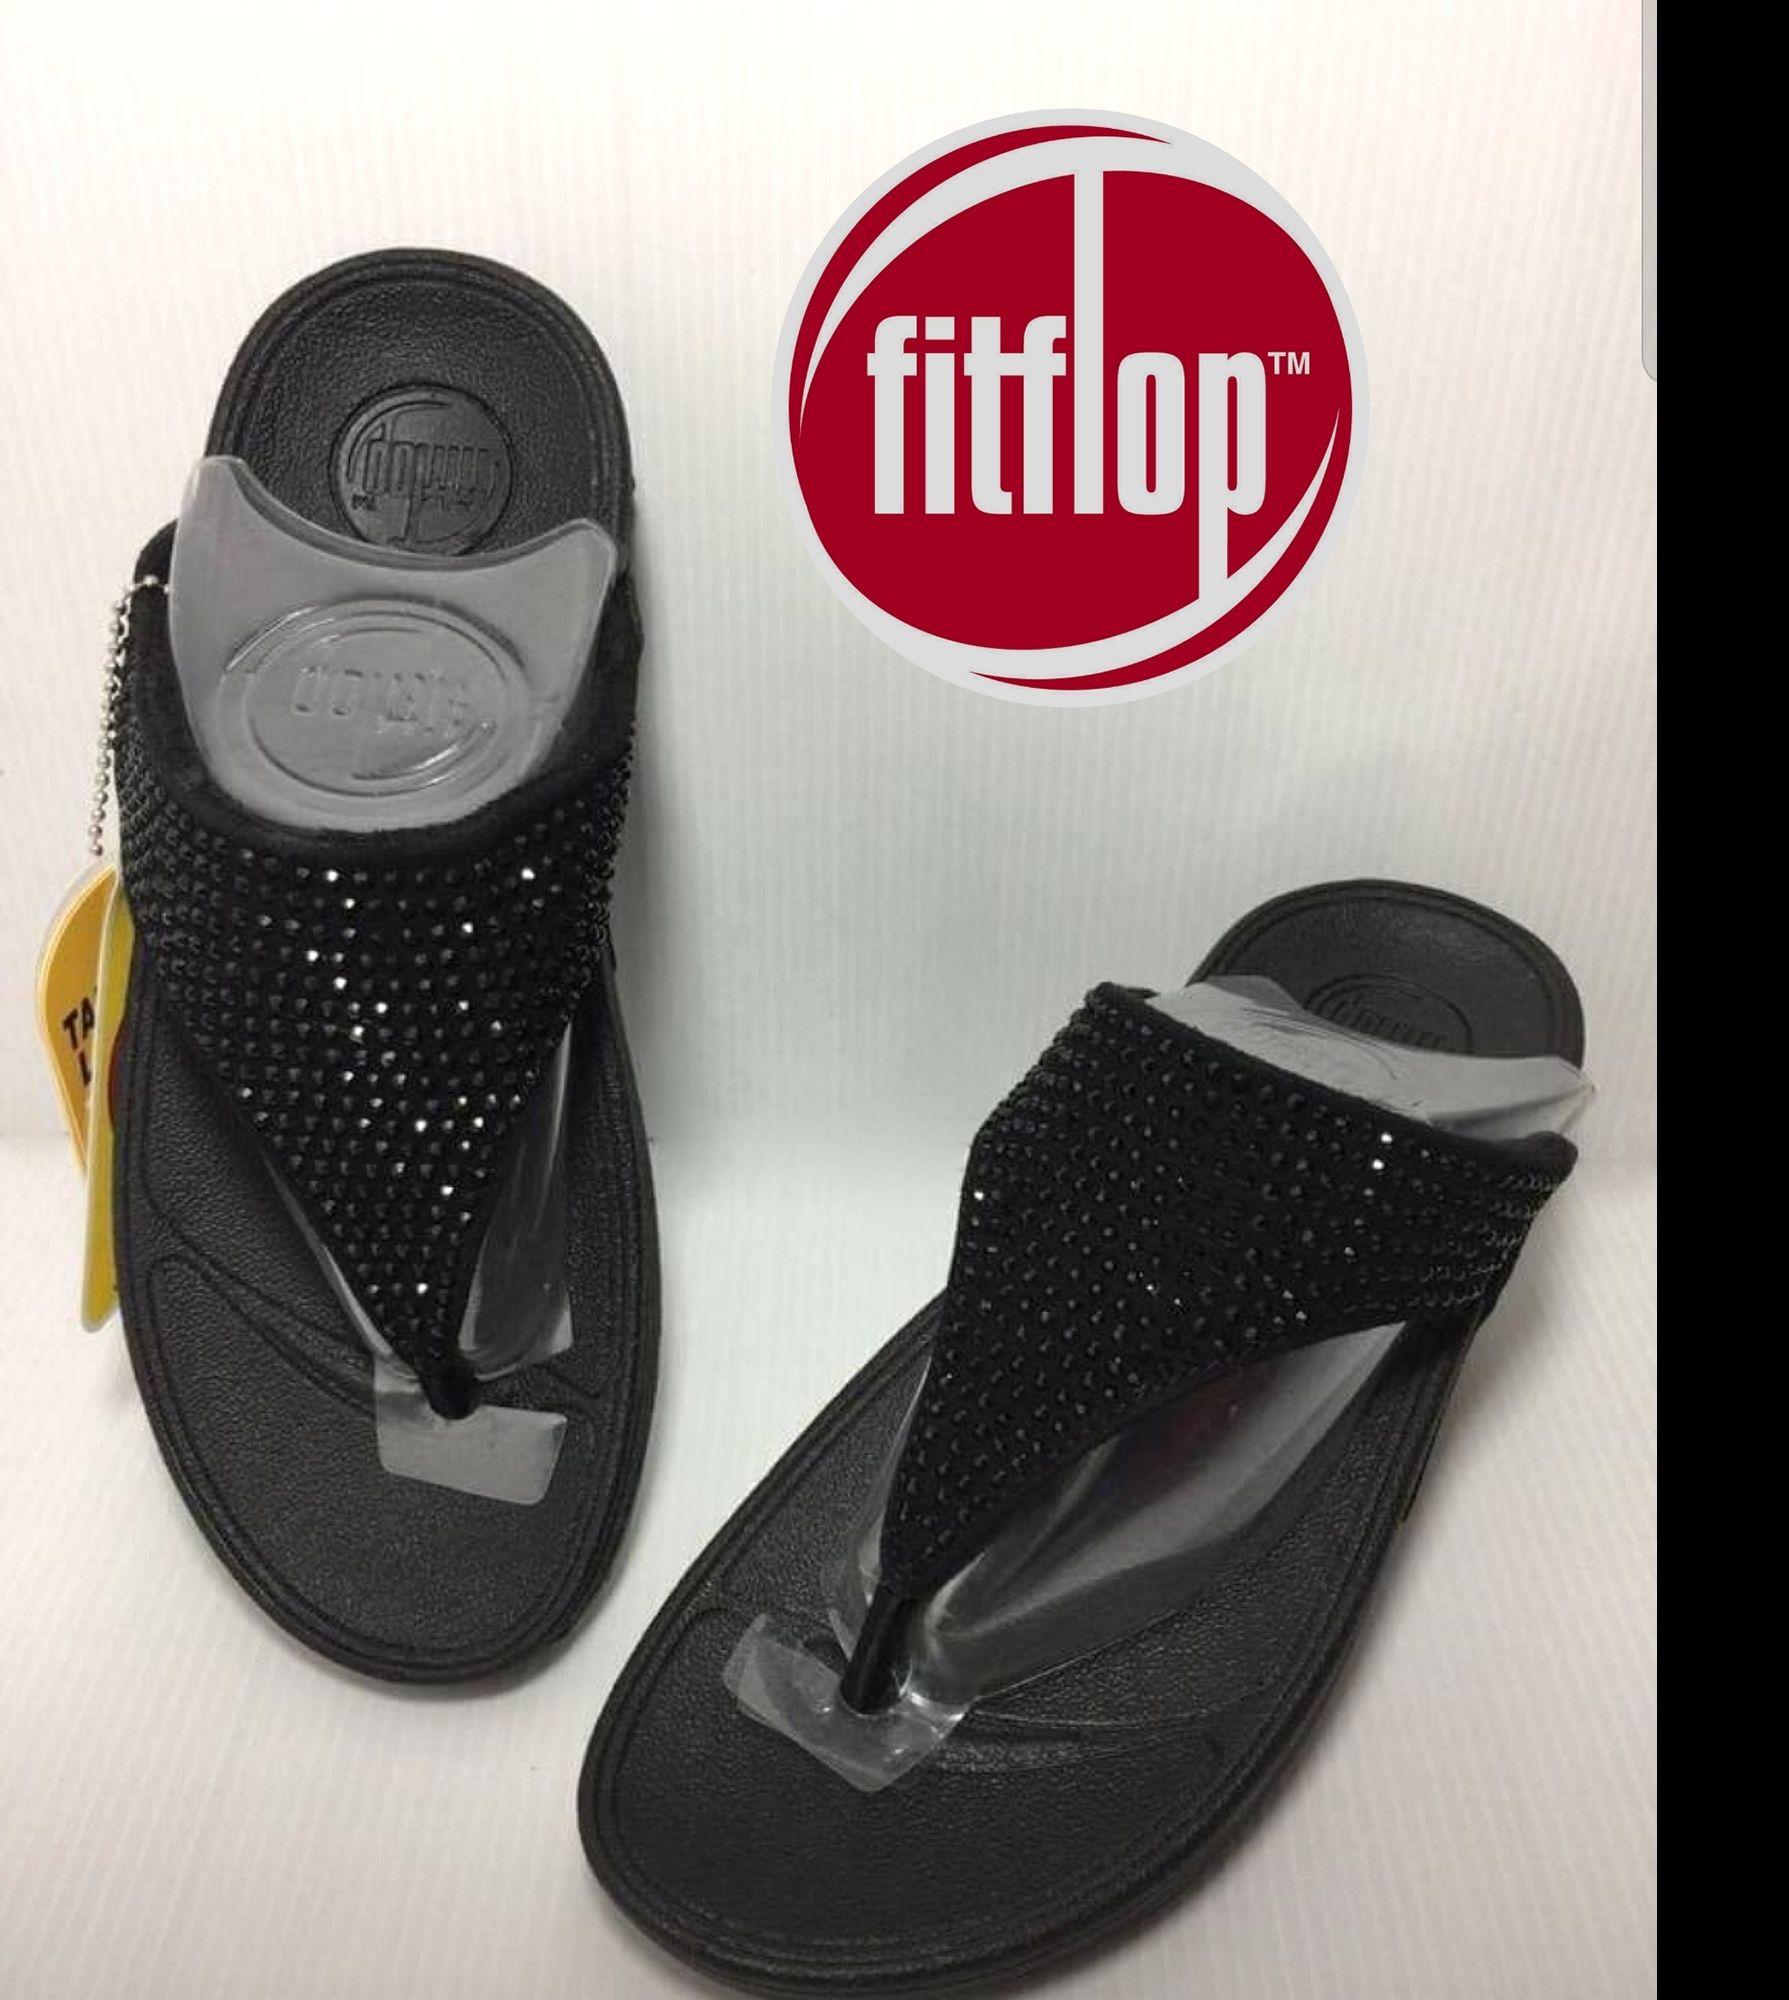 FitFlop Rokkit รองเท้าเพื่อสุขภาพ ช่วยลดแรงกระแทก และบรรเทาอาการปวดได้อย่าวดีเยี่ยม